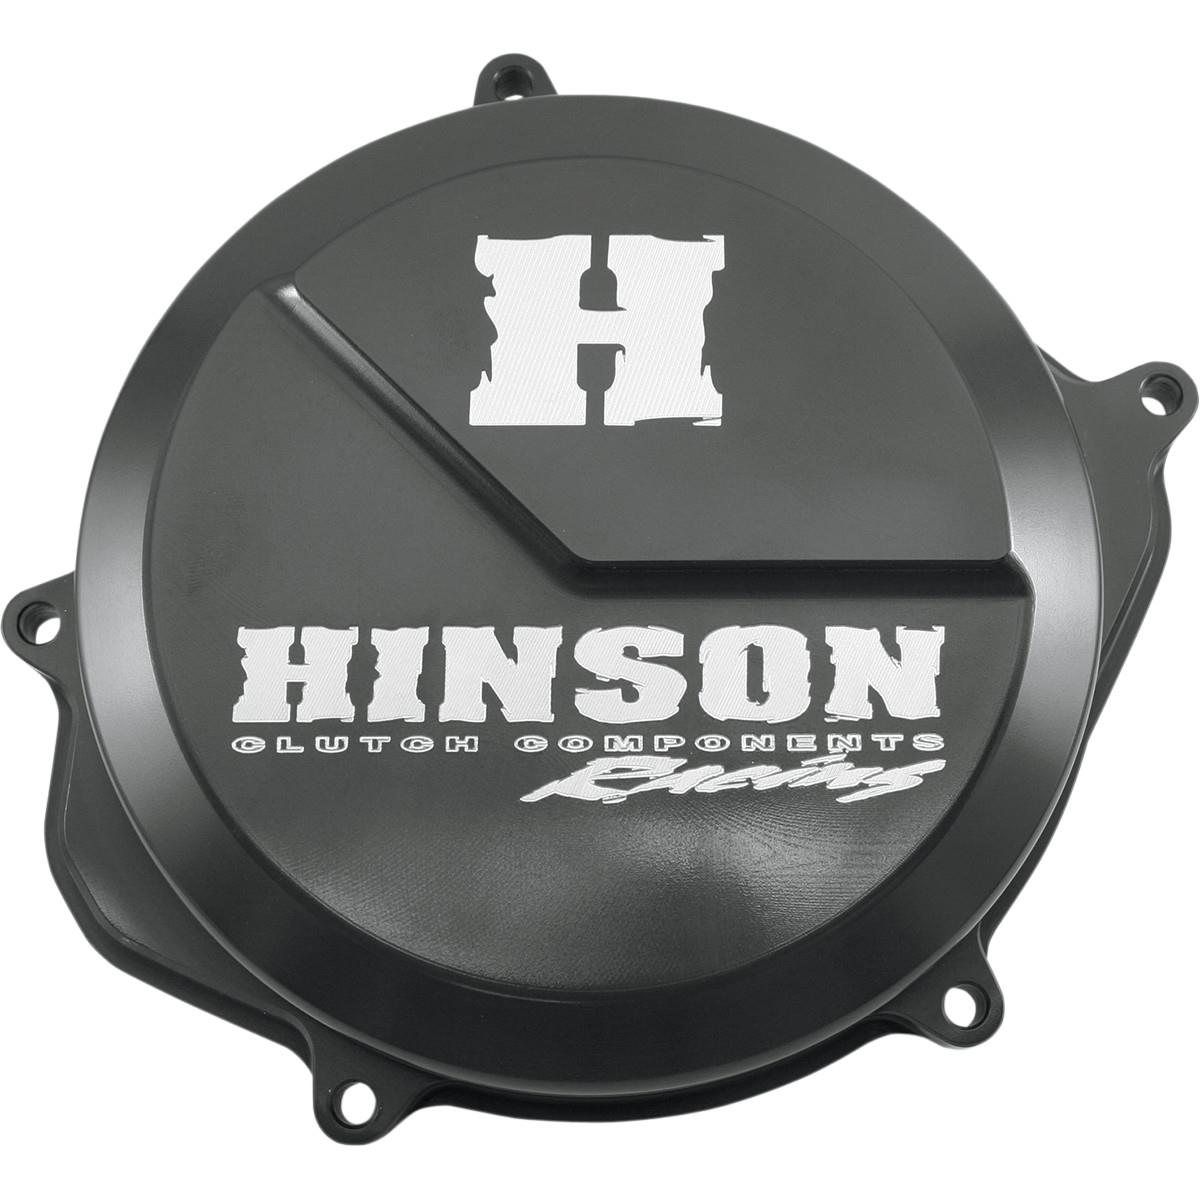 Hinson Clutch Cover Billetproof Honda CRF 450 09-16